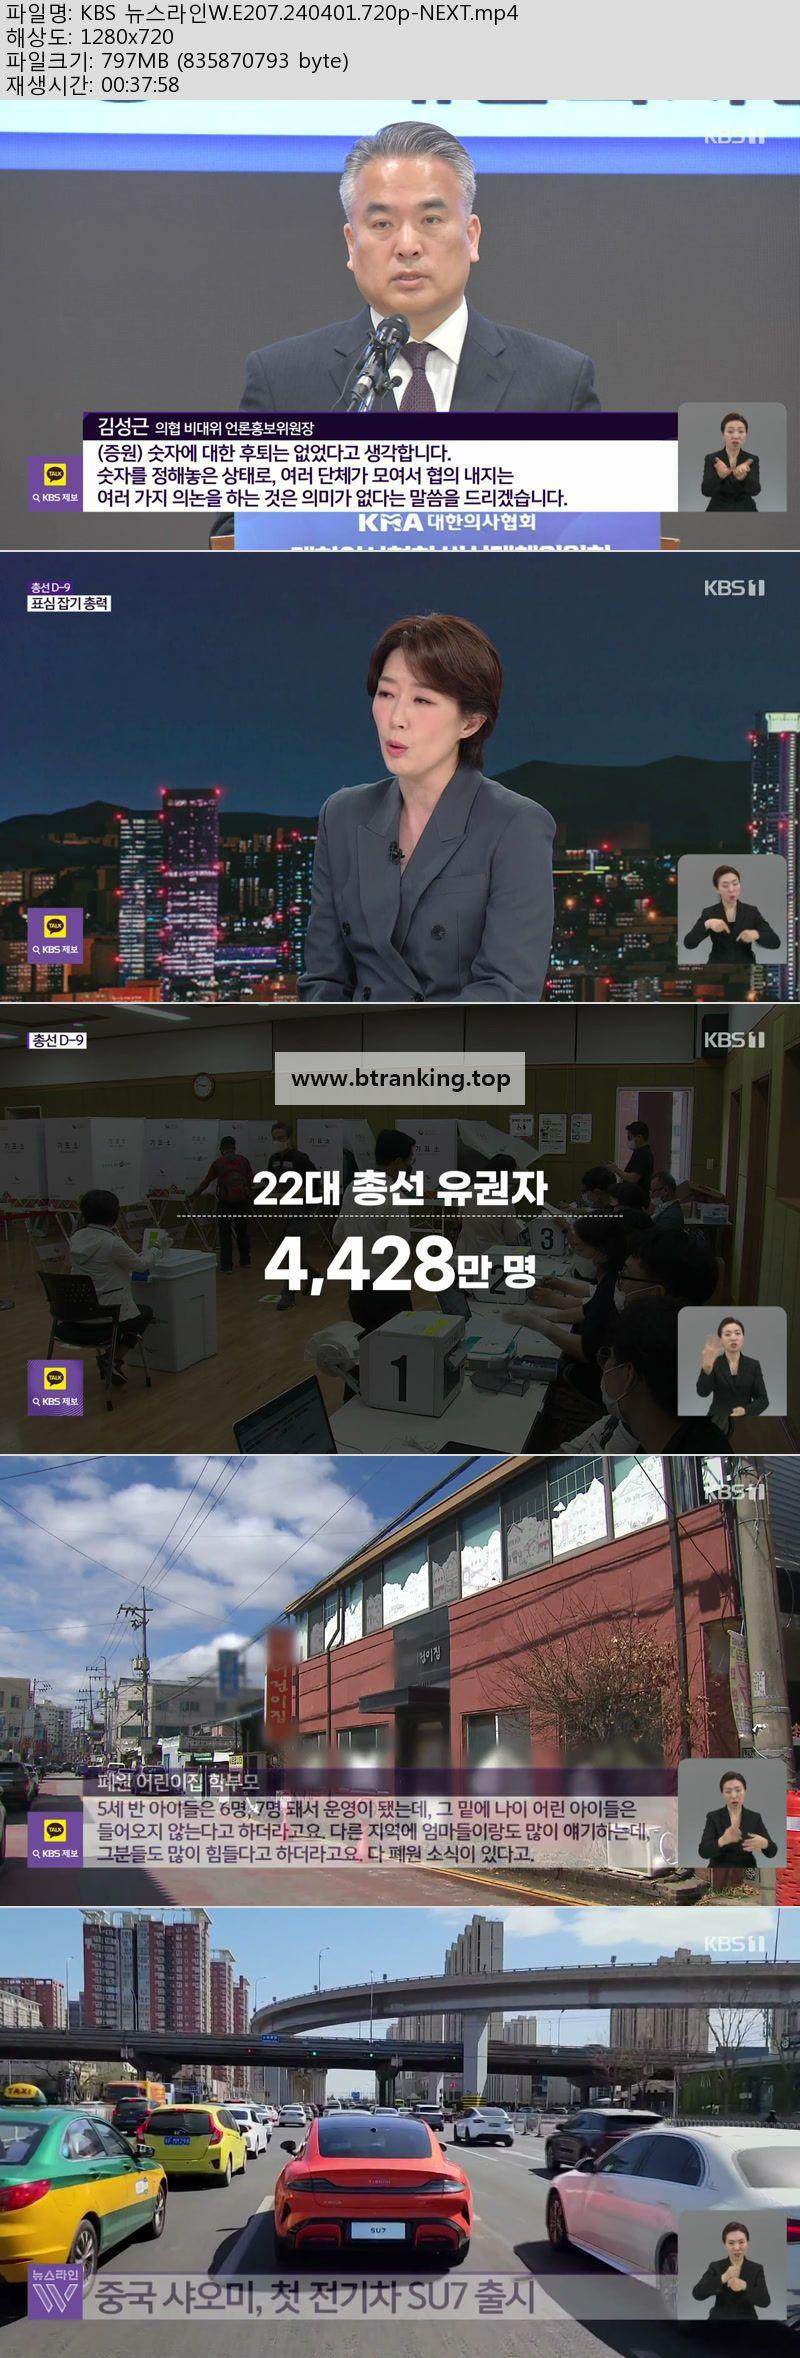 KBS 뉴스라인W.E207.240401.720p-NEXT